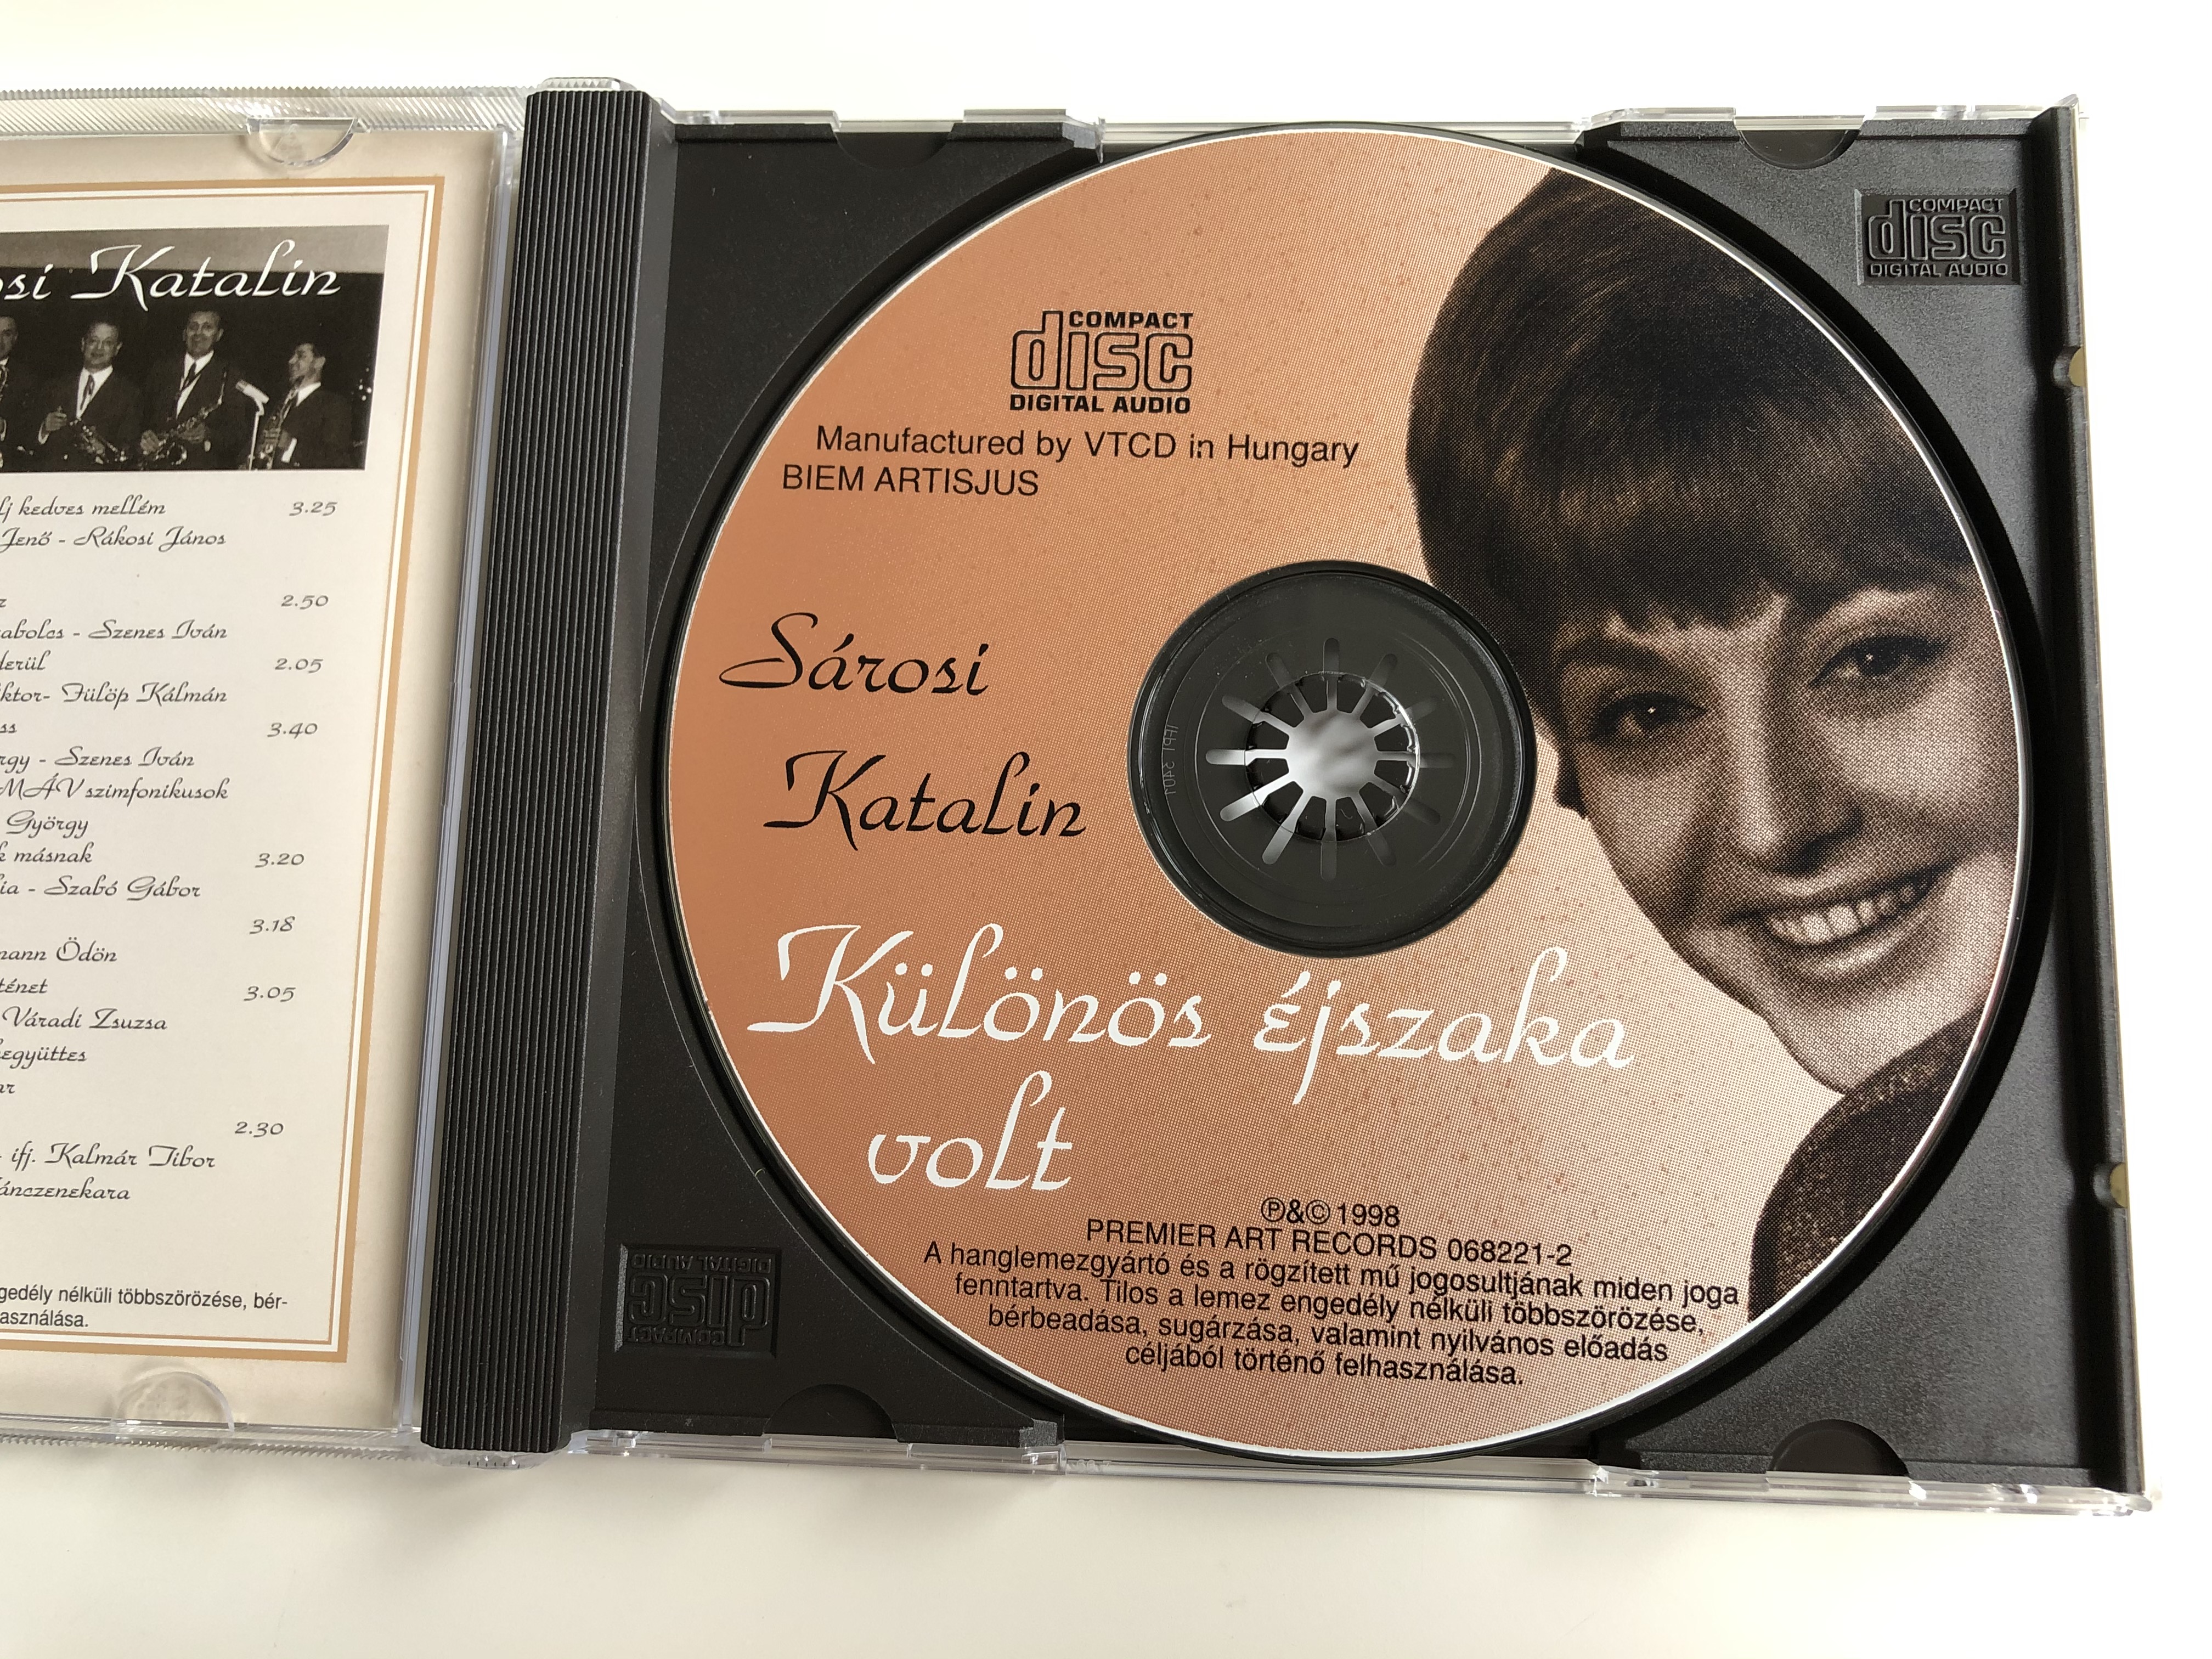 s-rosi-katalin-k-l-n-s-jszaka-volt-premier-art-records-audio-cd-1998-068221-2-3-.jpg